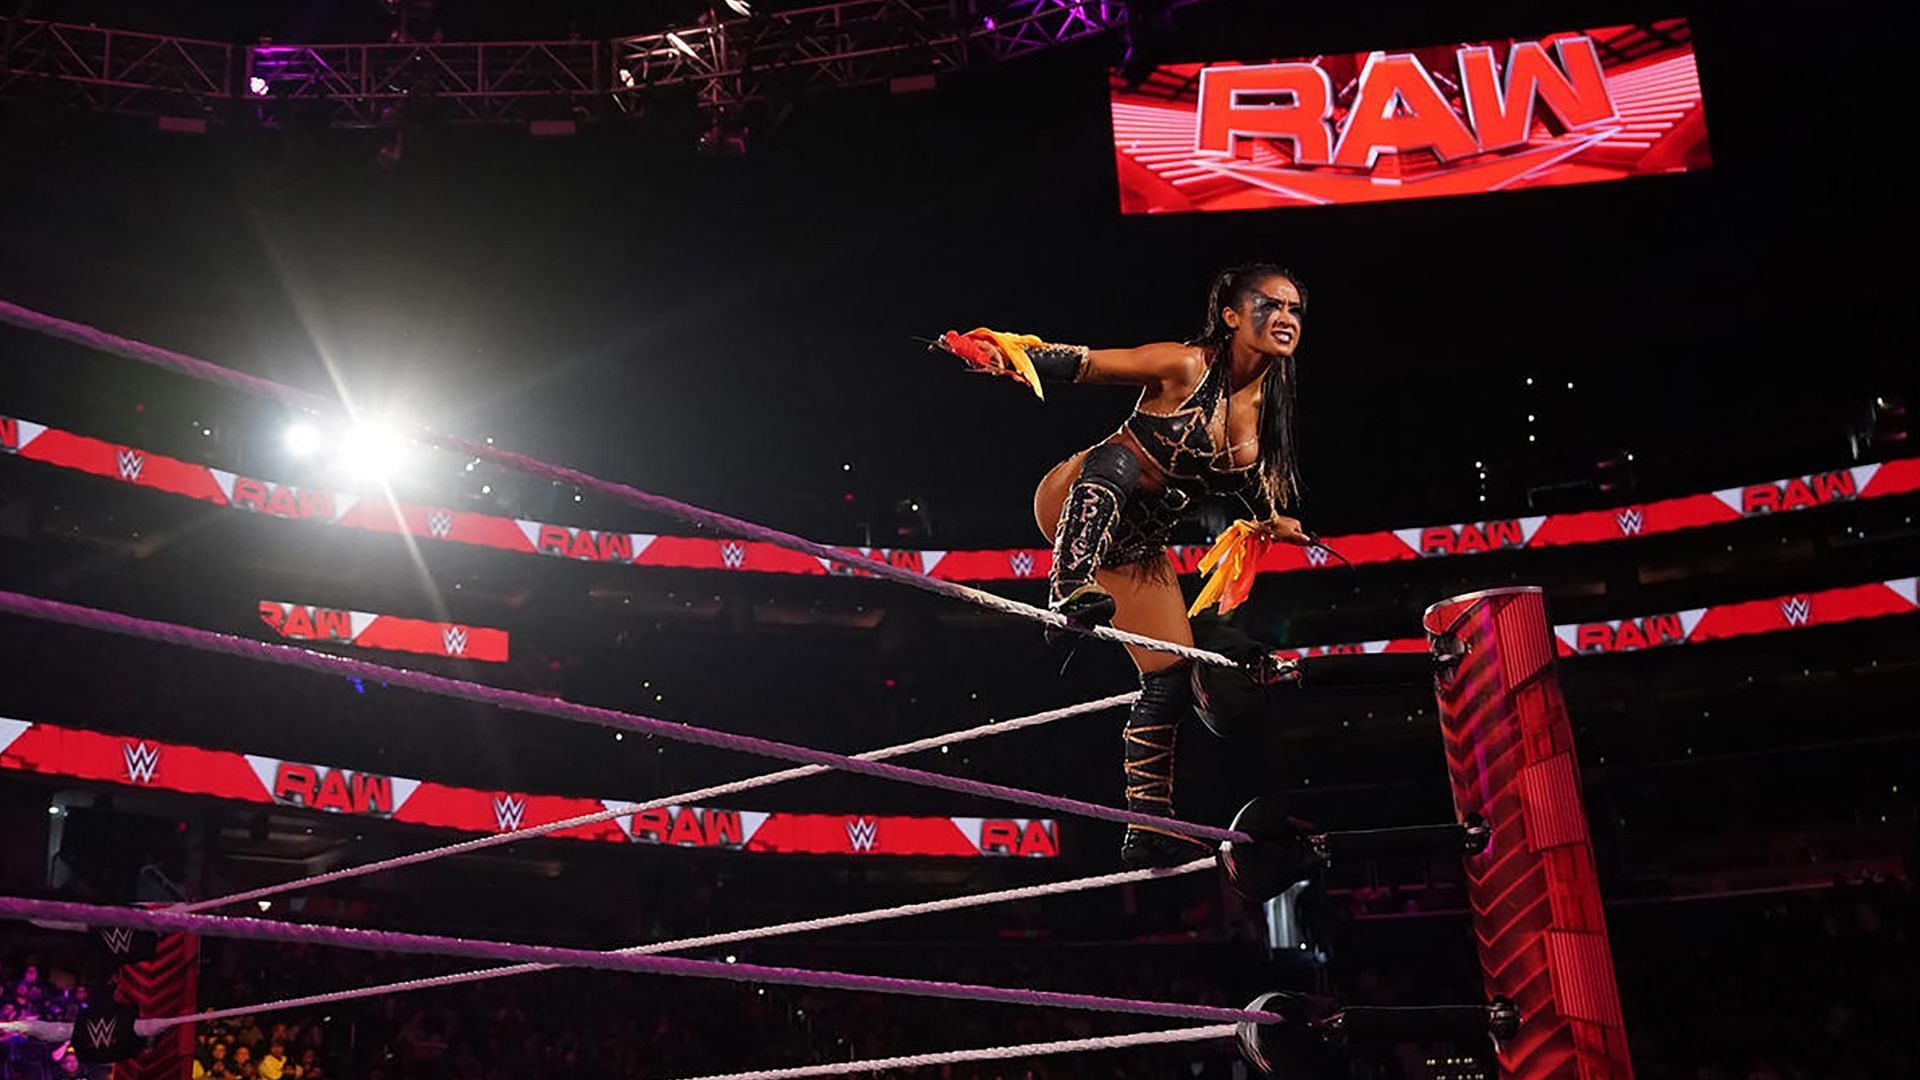 Xia Li poses for the crowd on WWE RAW